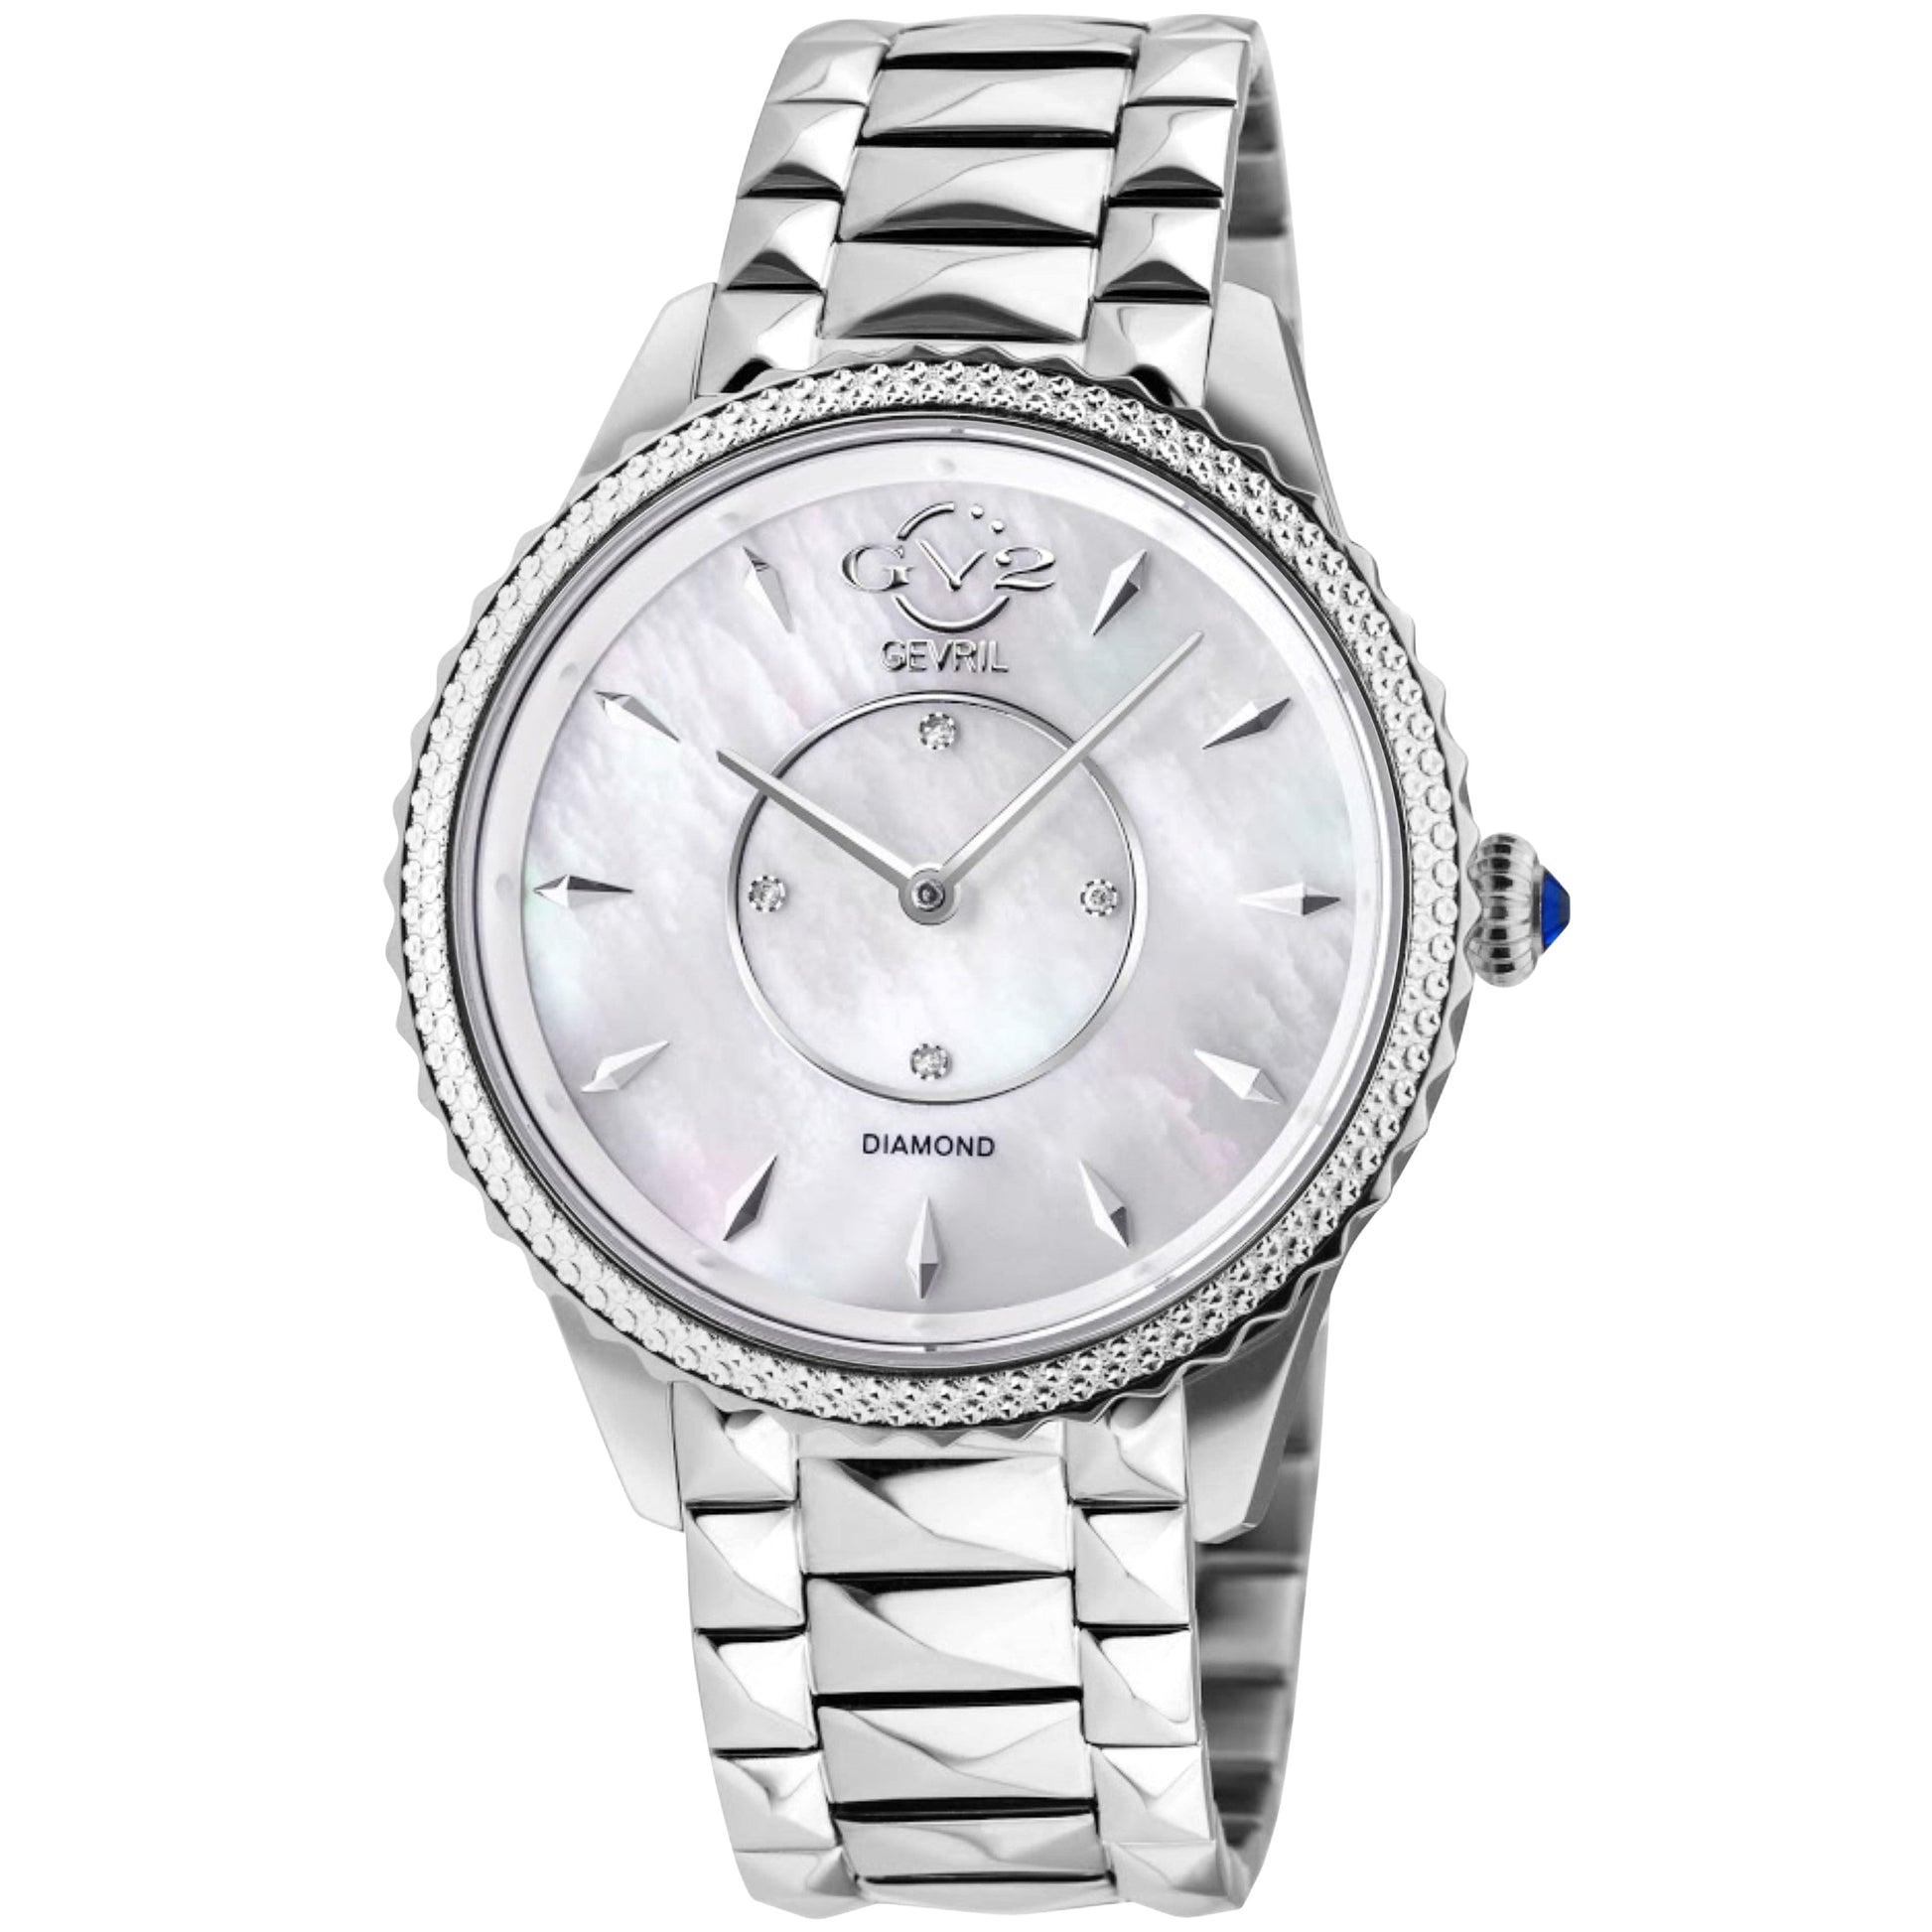 Gevril-Luxury-Swiss-Watches-GV2 Siena Diamond-11700-424